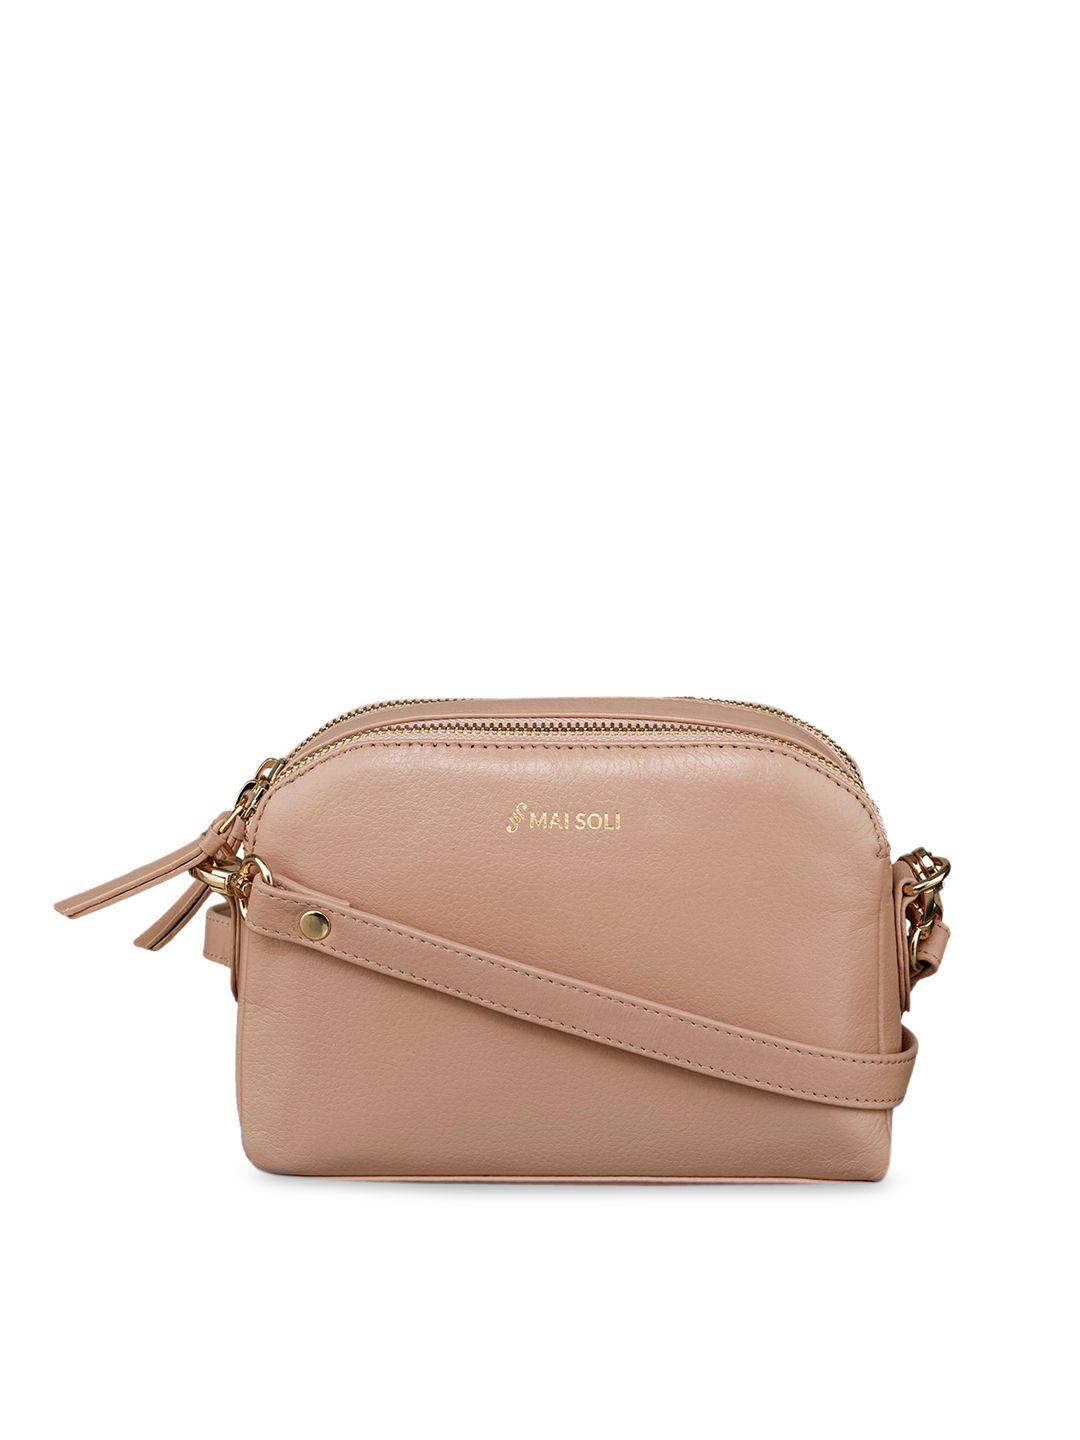 mai soli women nude-pink solid genuine leather double zip emma mini sling bag